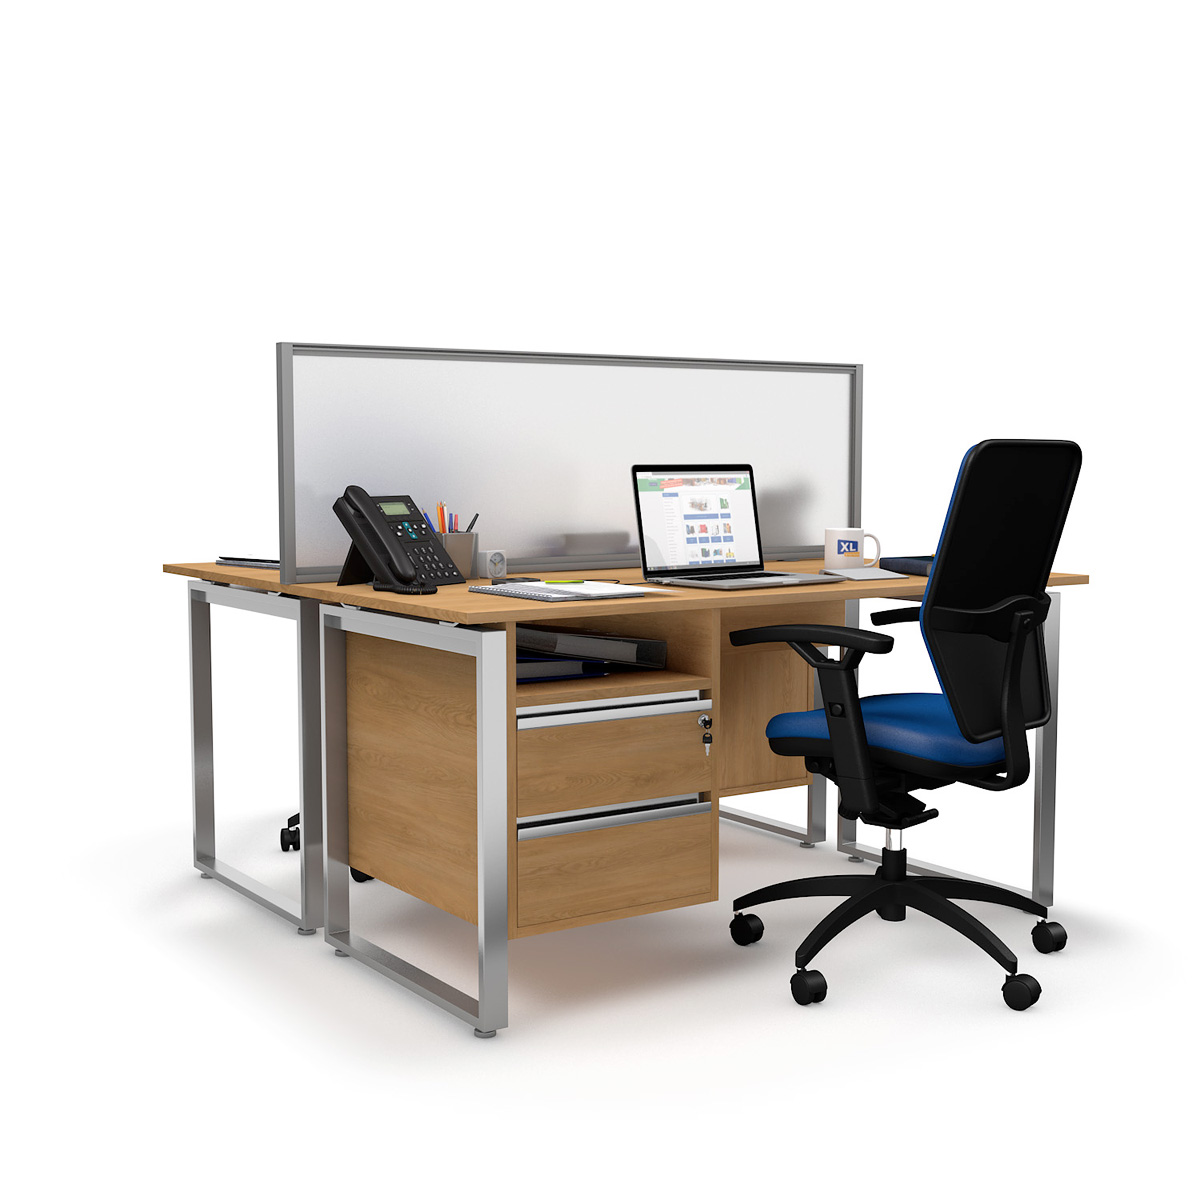 Acrylic Clear Barrier Desk Divider Medical Office Screen 70cm h 